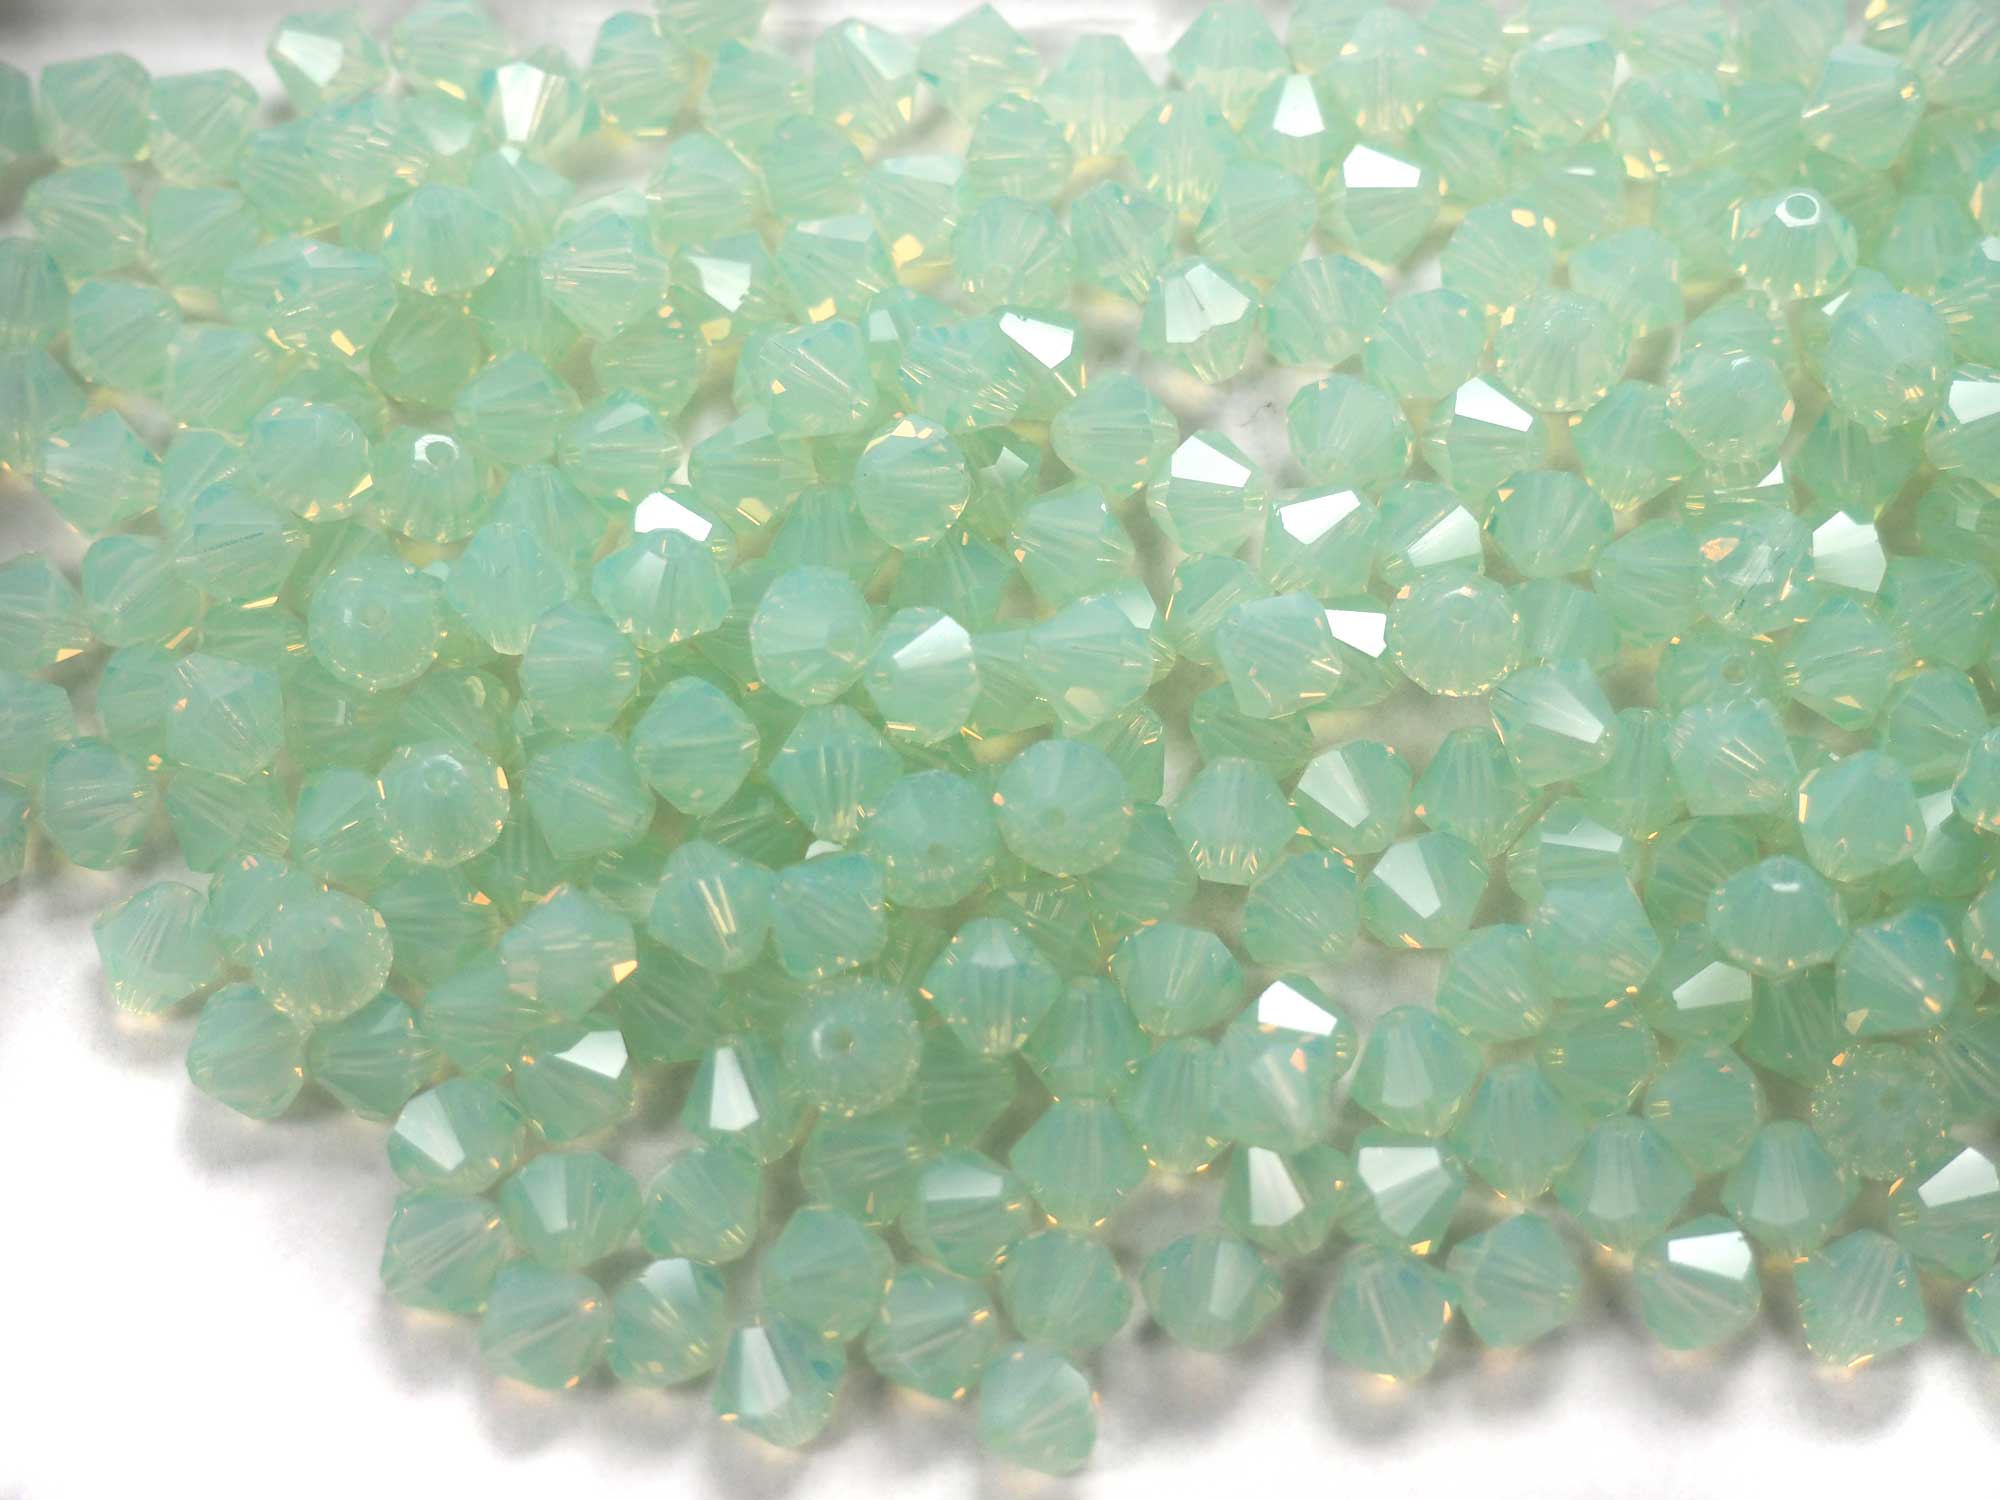 Chrysolite Opal (Preciosa color), Czech Glass Beads, Machine Cut Bicones (MC Rondell, Diamond Shape), pale milky green crystals